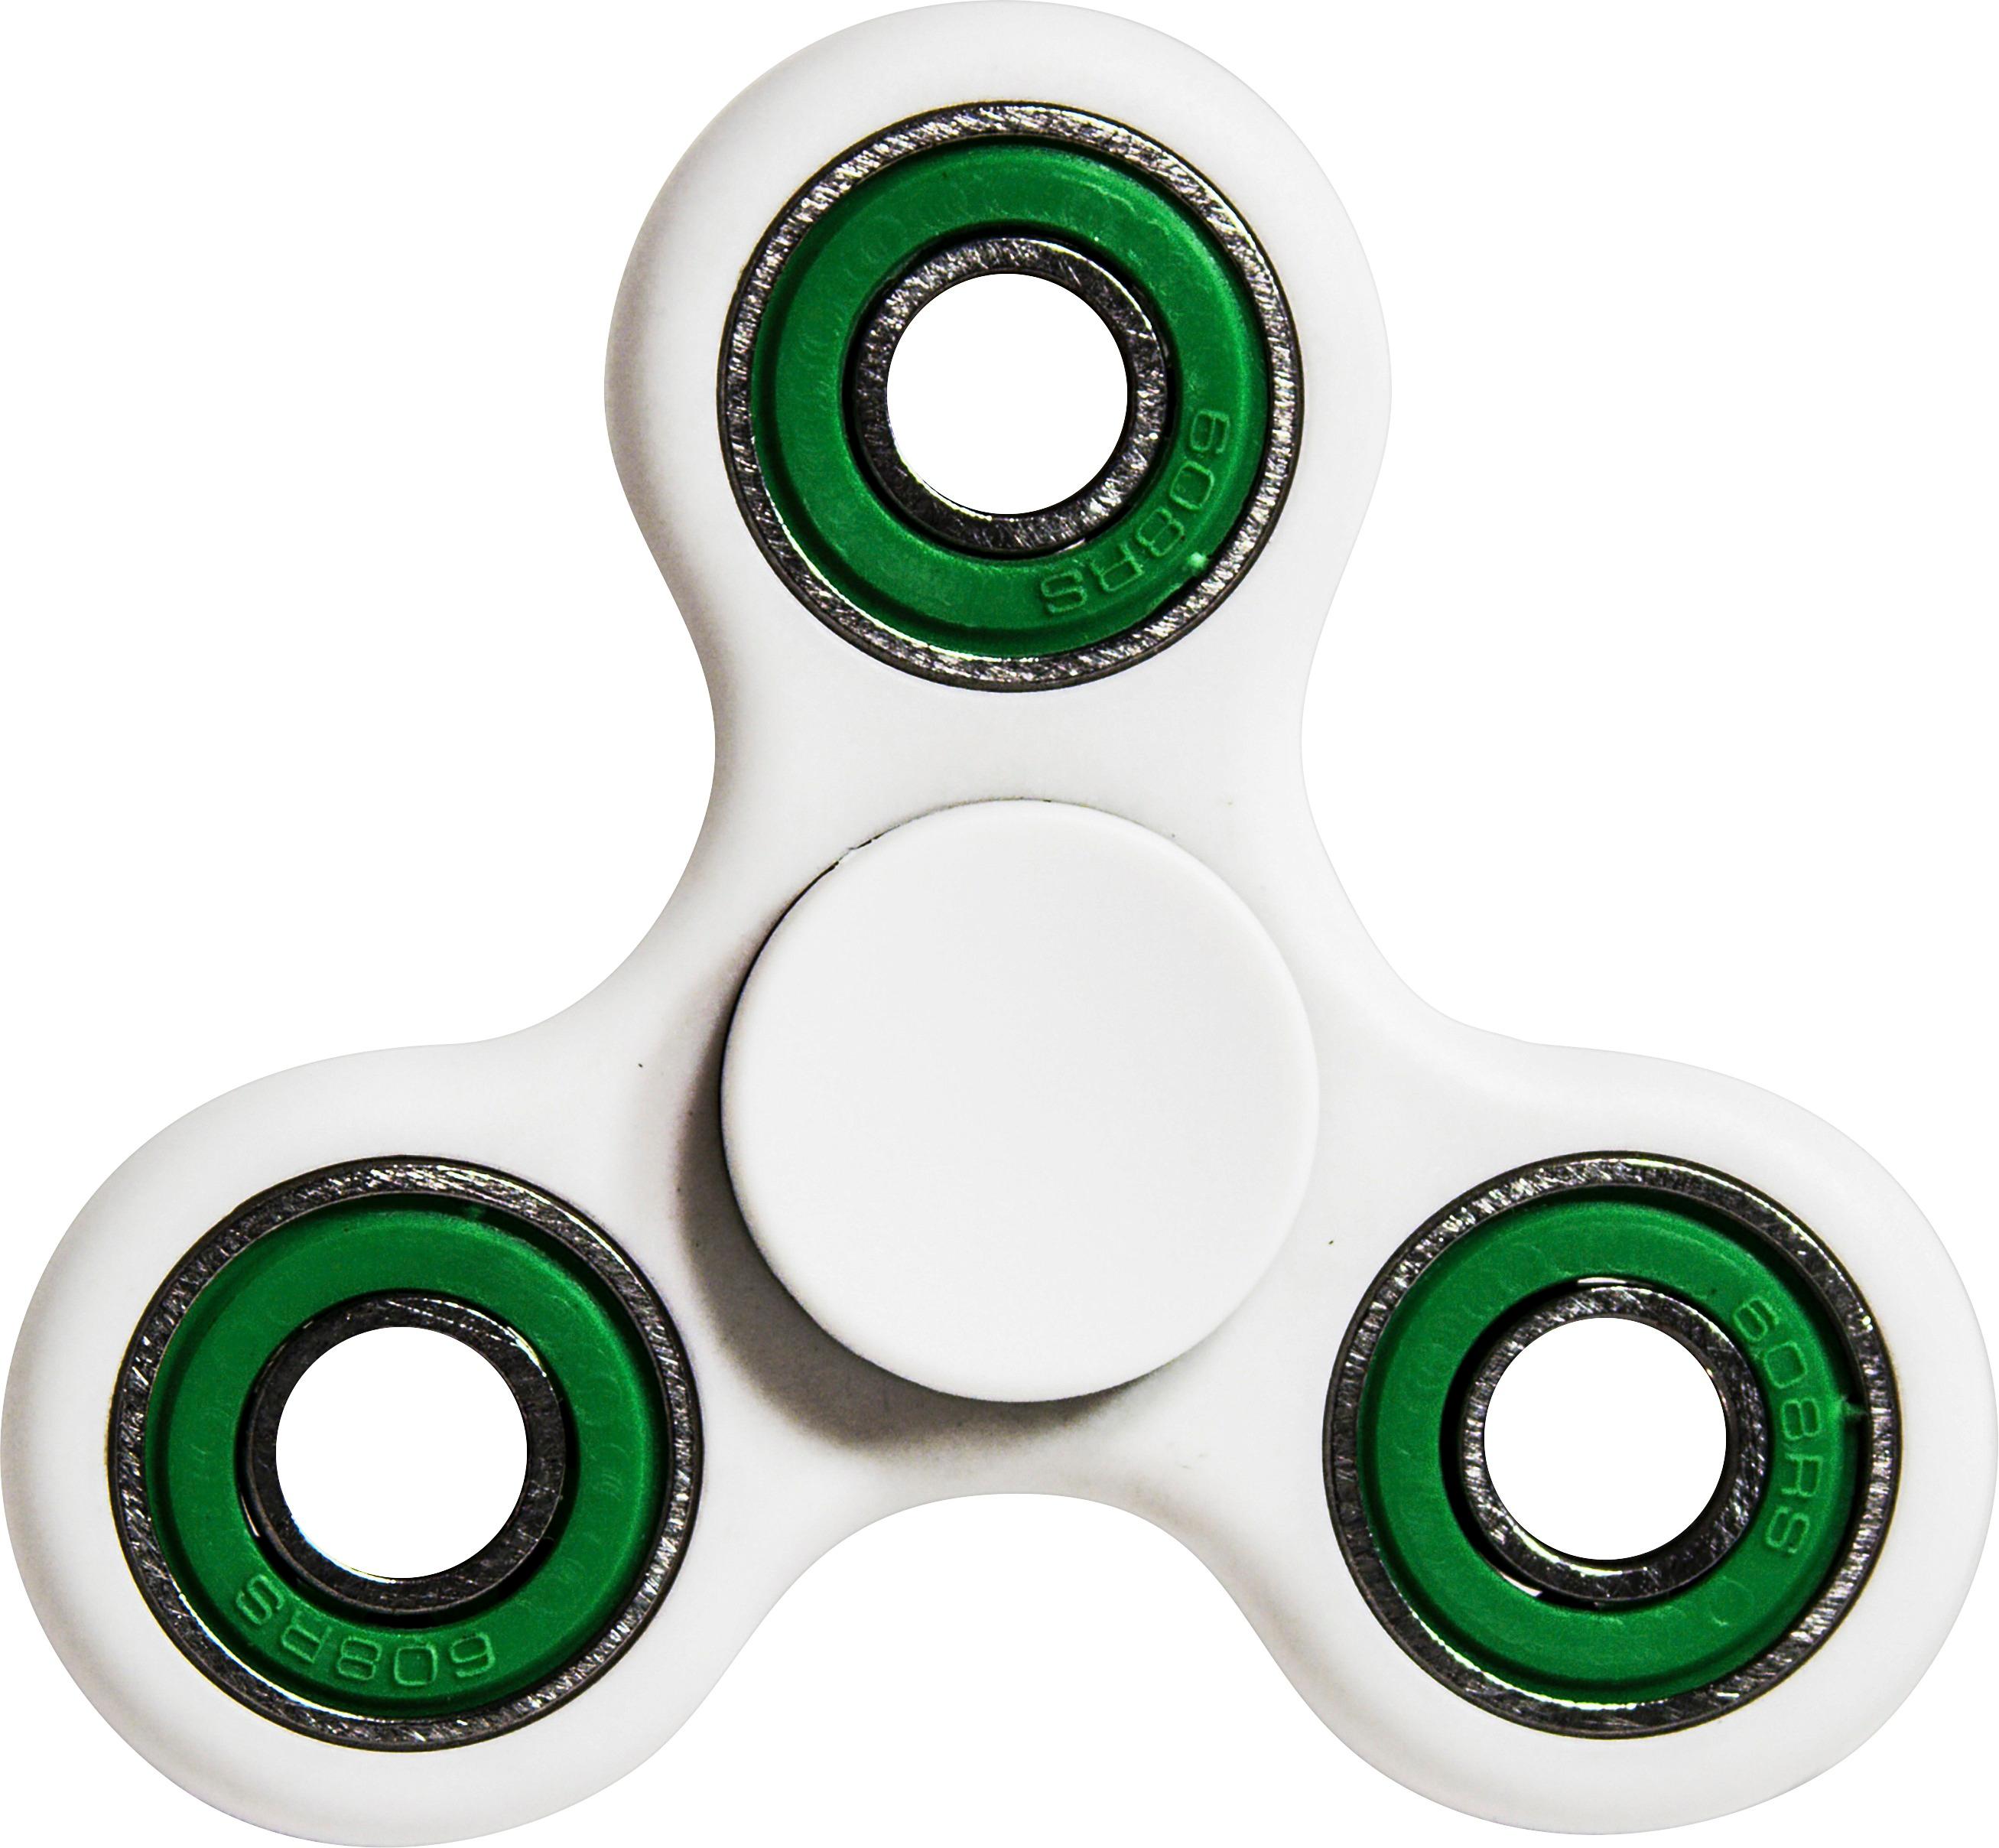 Fidget Spinner Gyro with balls anti-stress gadget green 6.5 x 6.5 cm - VMD  parfumerie - drogerie